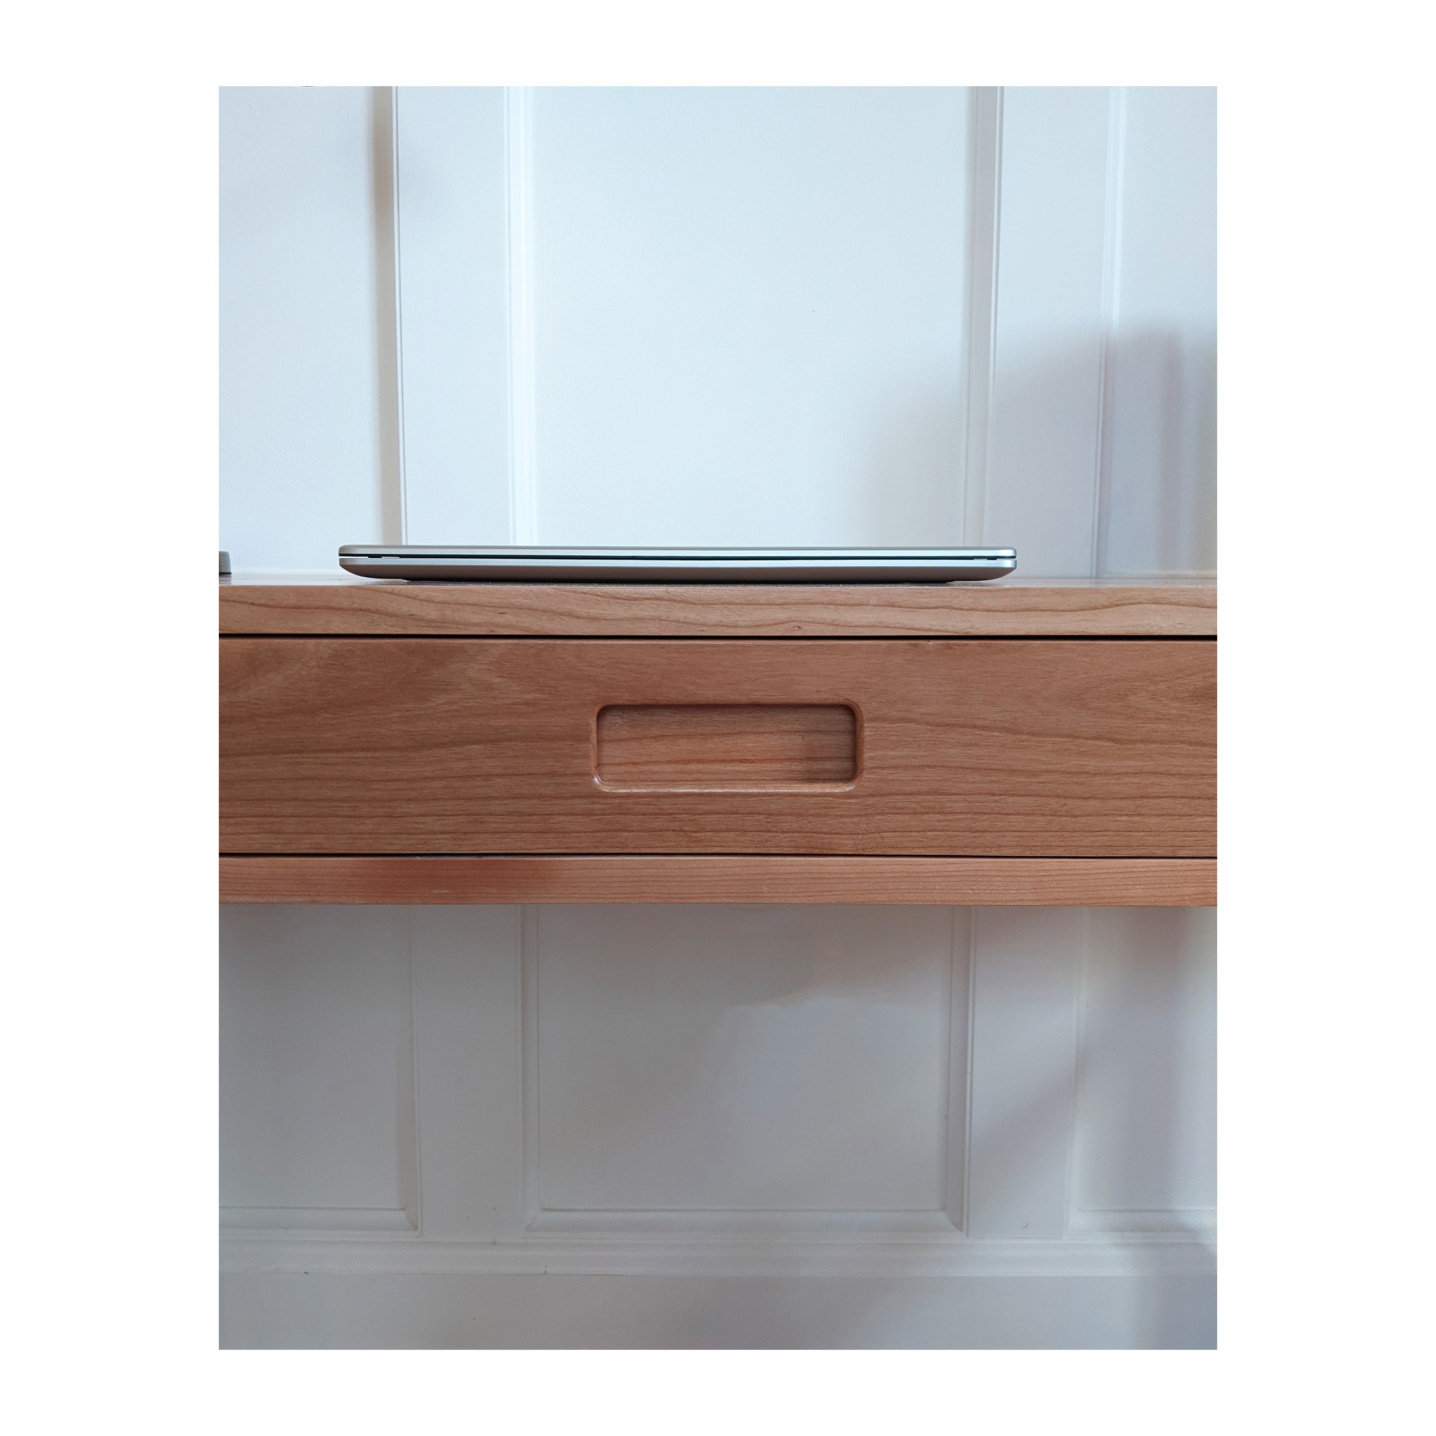 Danish cherry desk with wooden drawer pulls